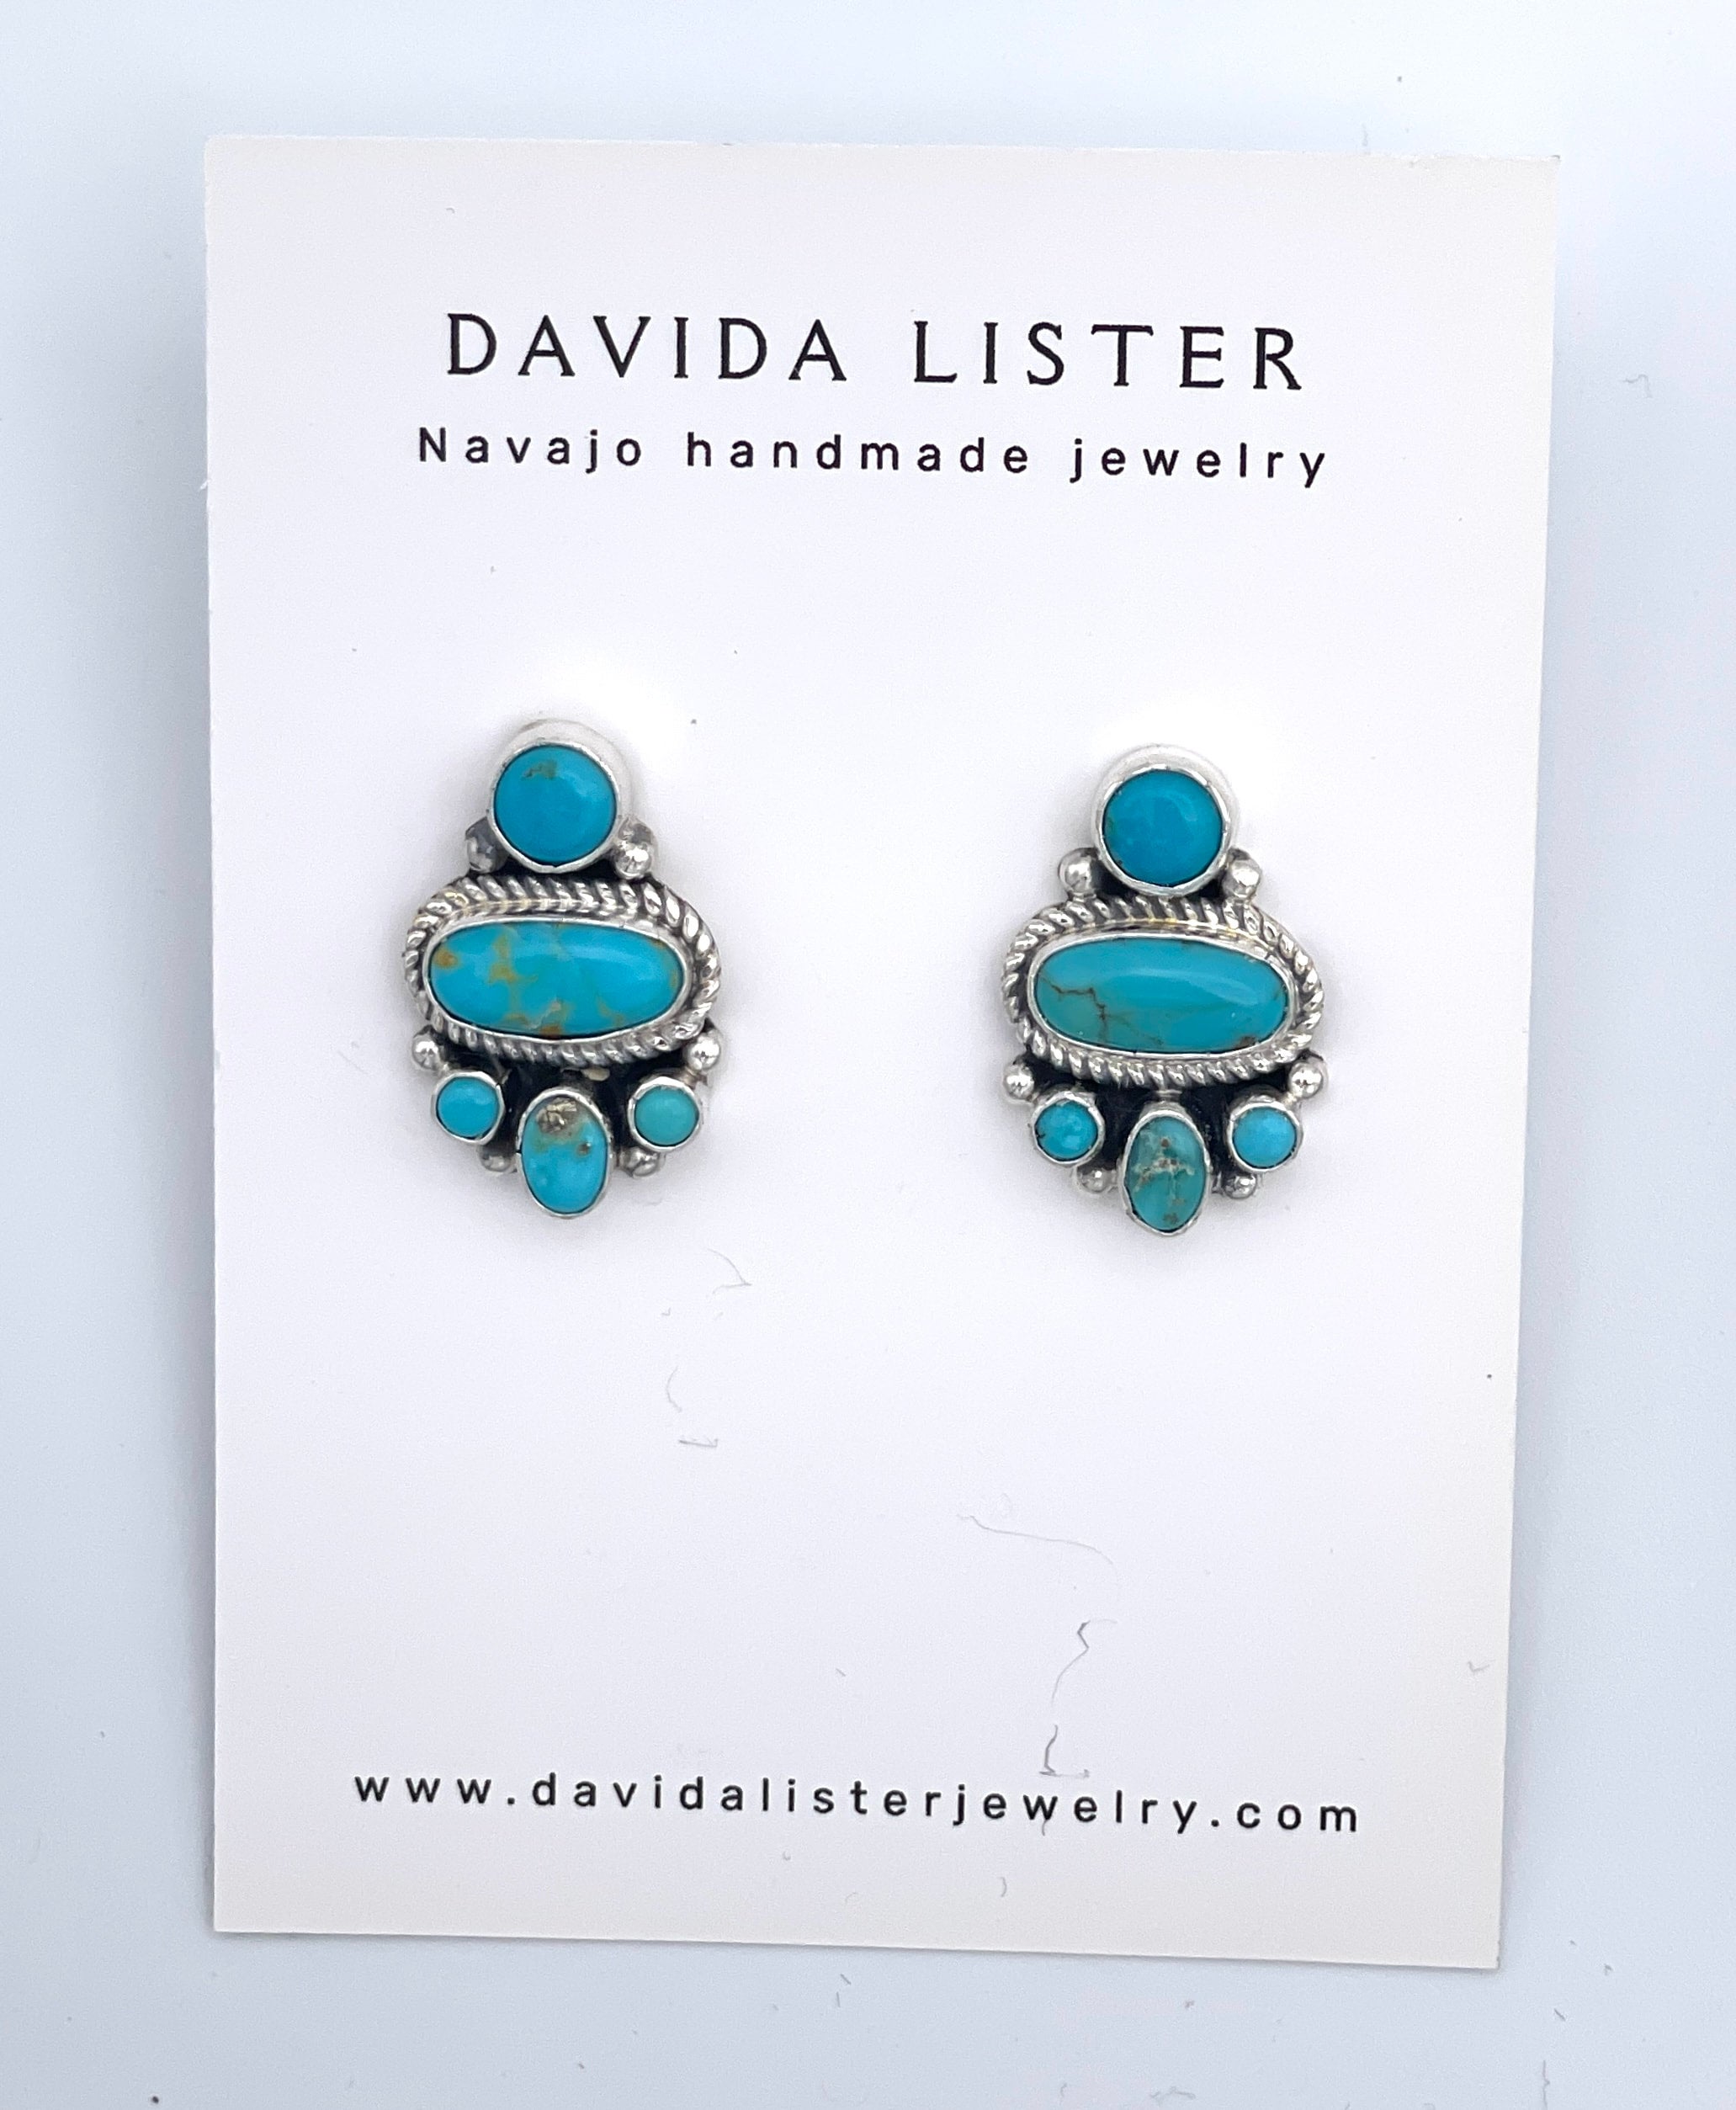 Davida Lister (@davidalisterjewelry) • Instagram photos and videos